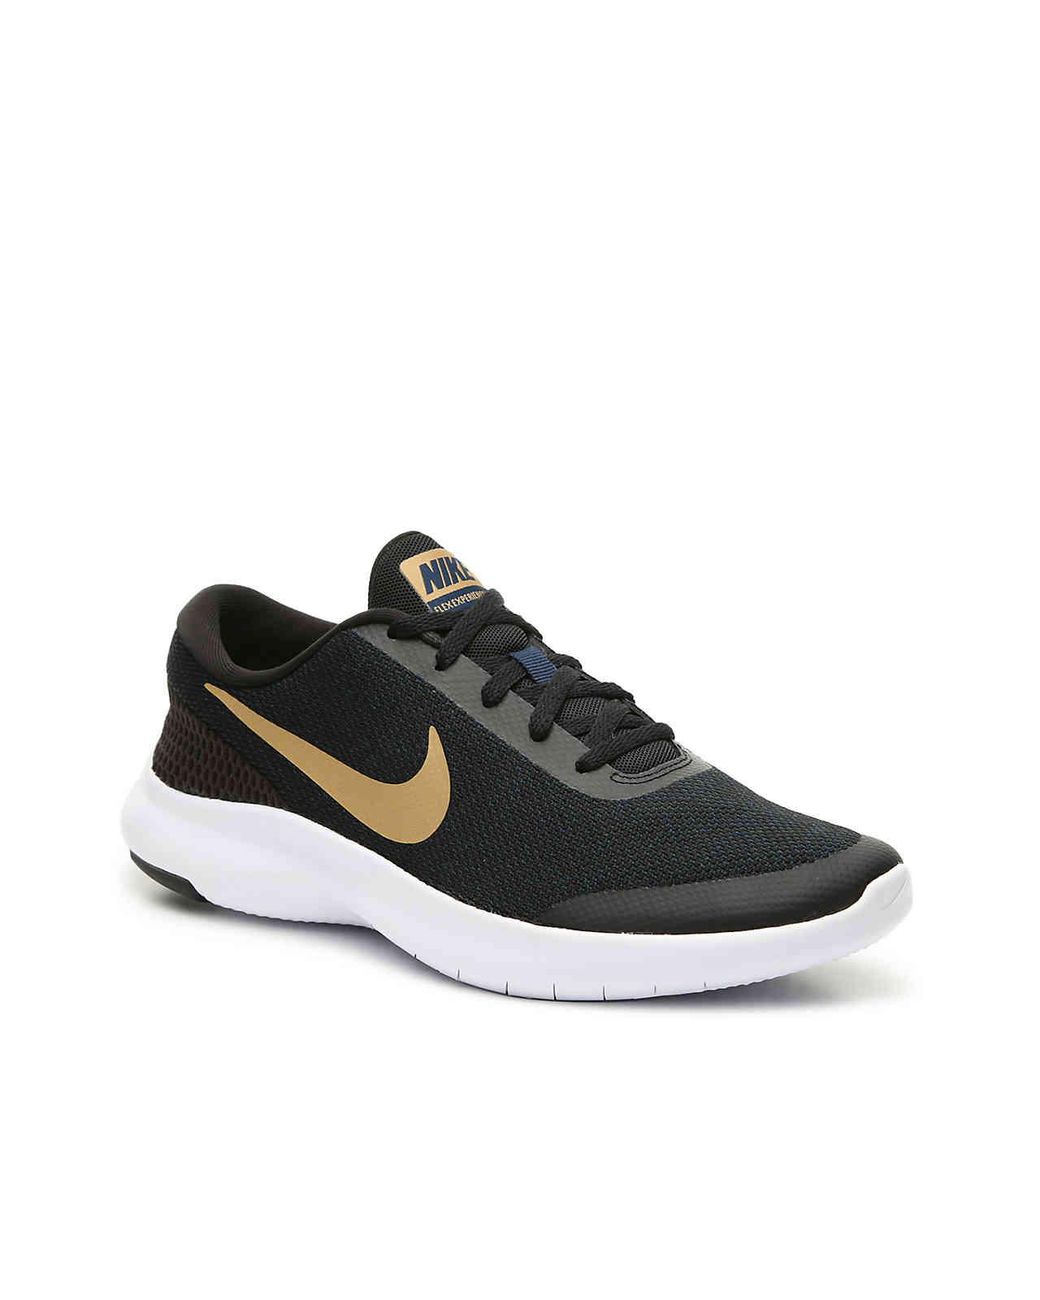 Nike Synthetic Flex Experience Rn 7 Lightweight Running Shoe in Black/Gold  Metallic (Black) | Lyst